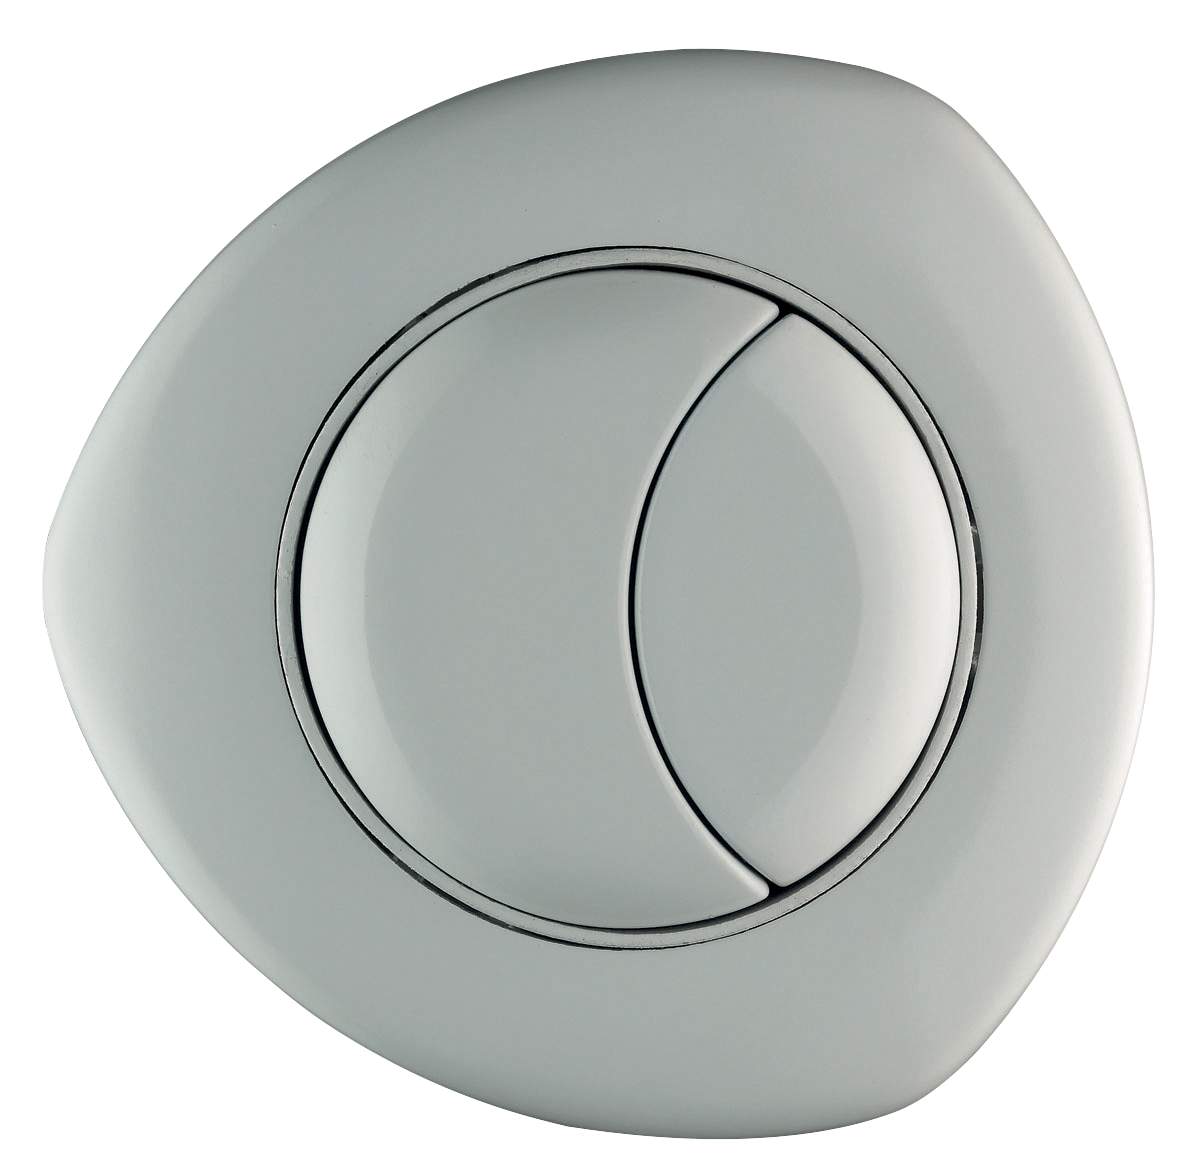 Flush-mounted two-button pneumatic control white